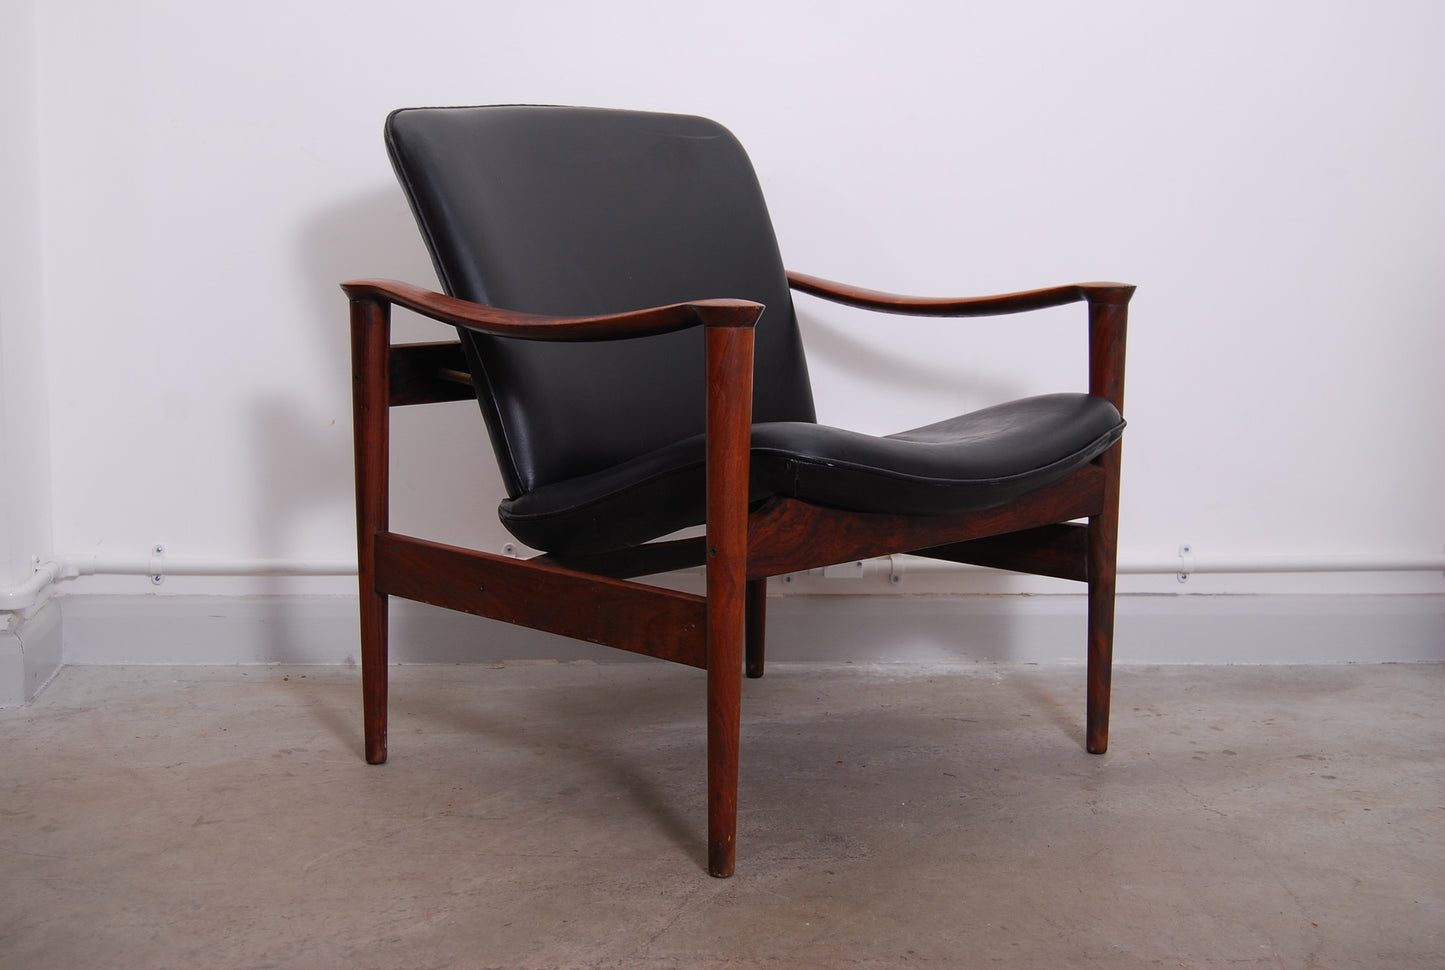 Rosewood lounge chair by Fredik Kayser